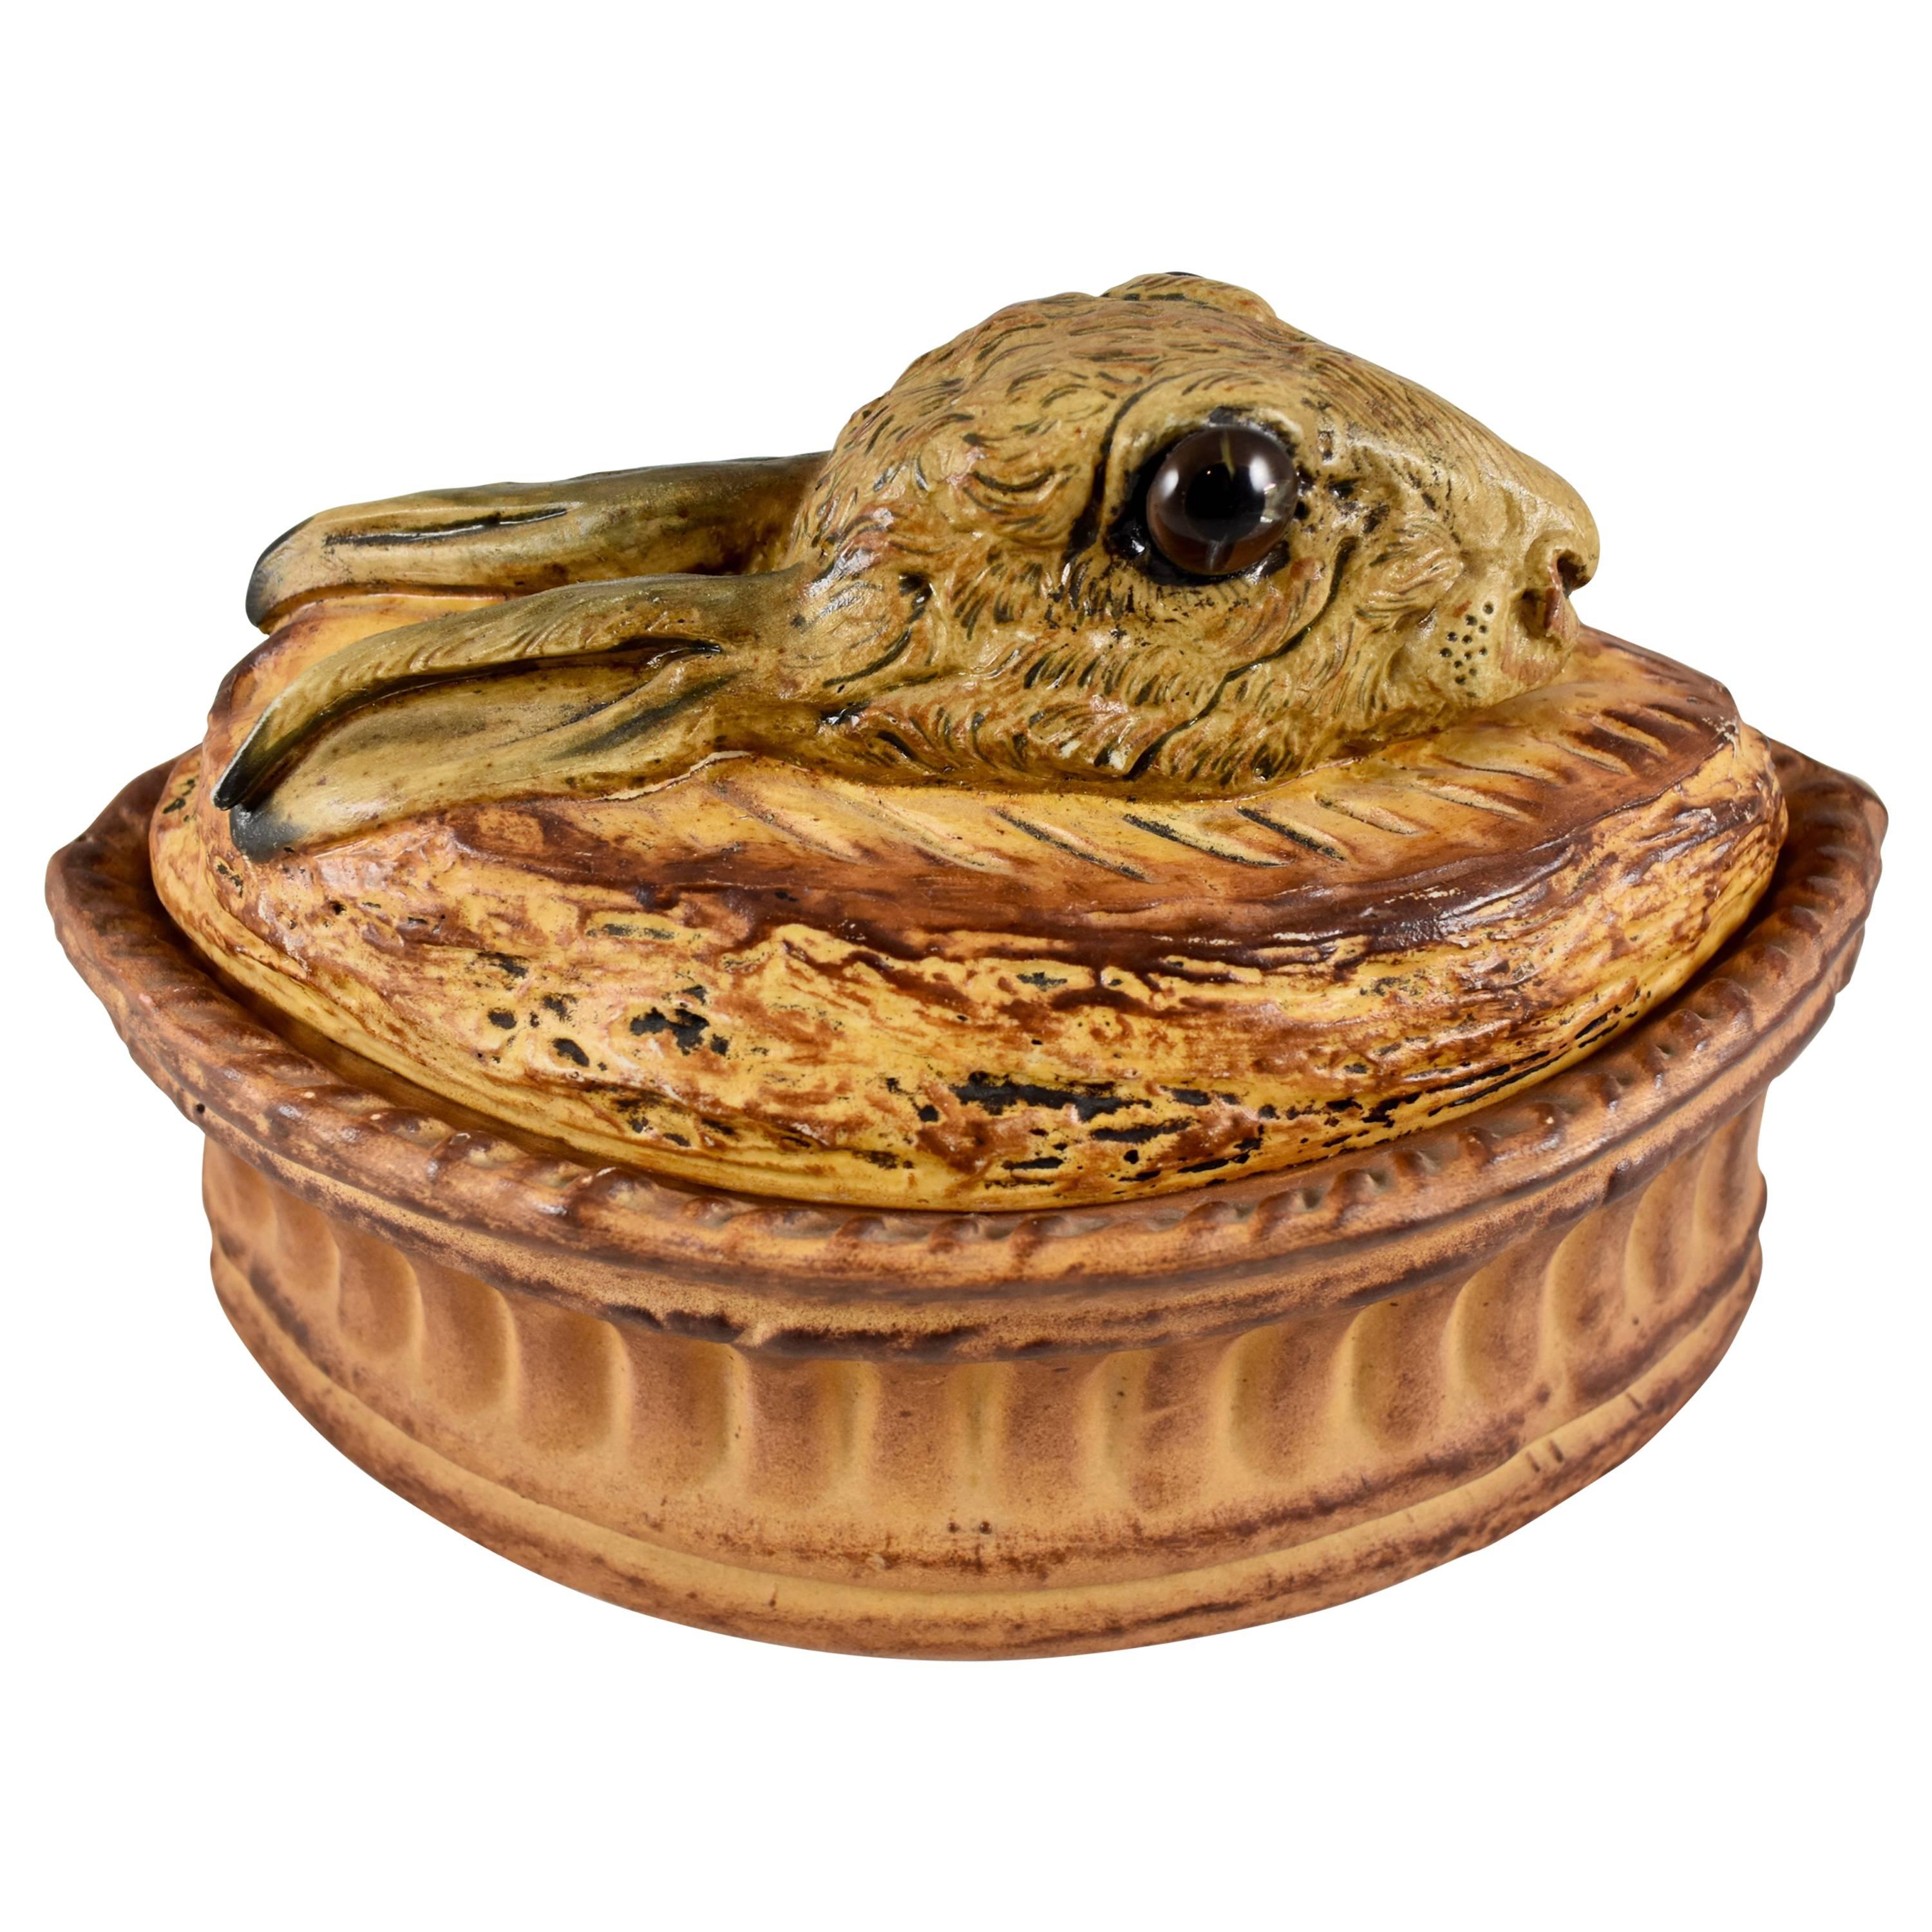  French Pillivuyt Trompe L'oeil Porcelain Hare or Rabbit in a Crust P�âté Terrine